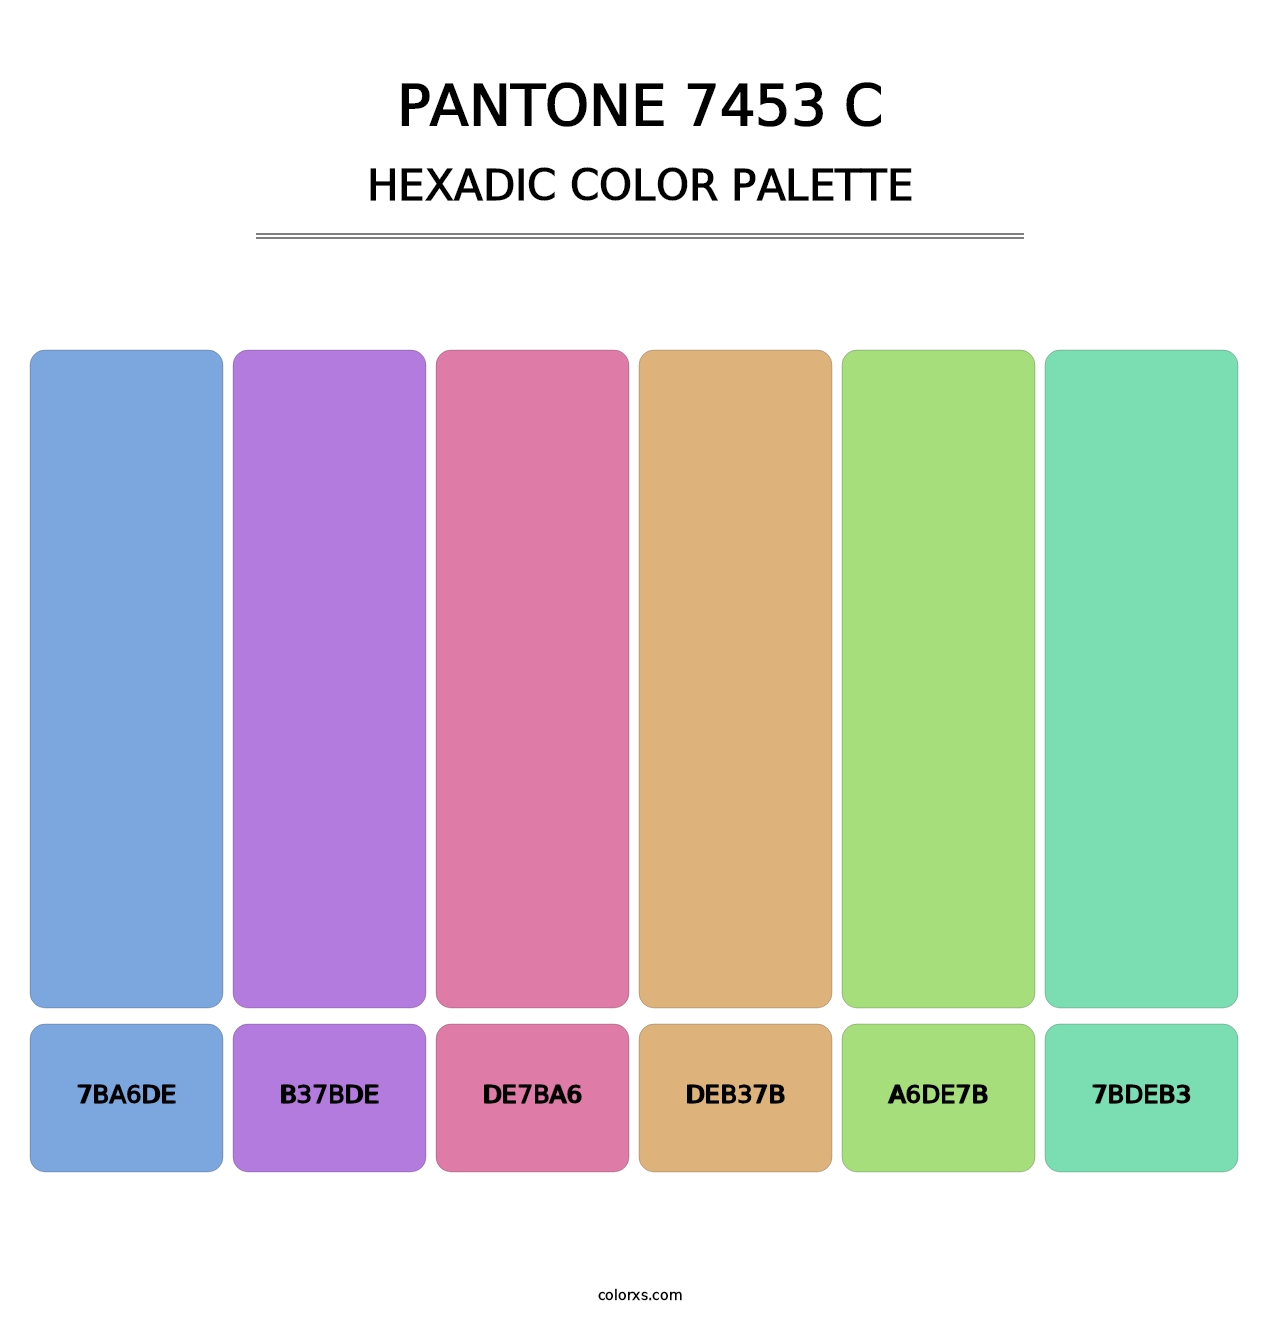 PANTONE 7453 C - Hexadic Color Palette